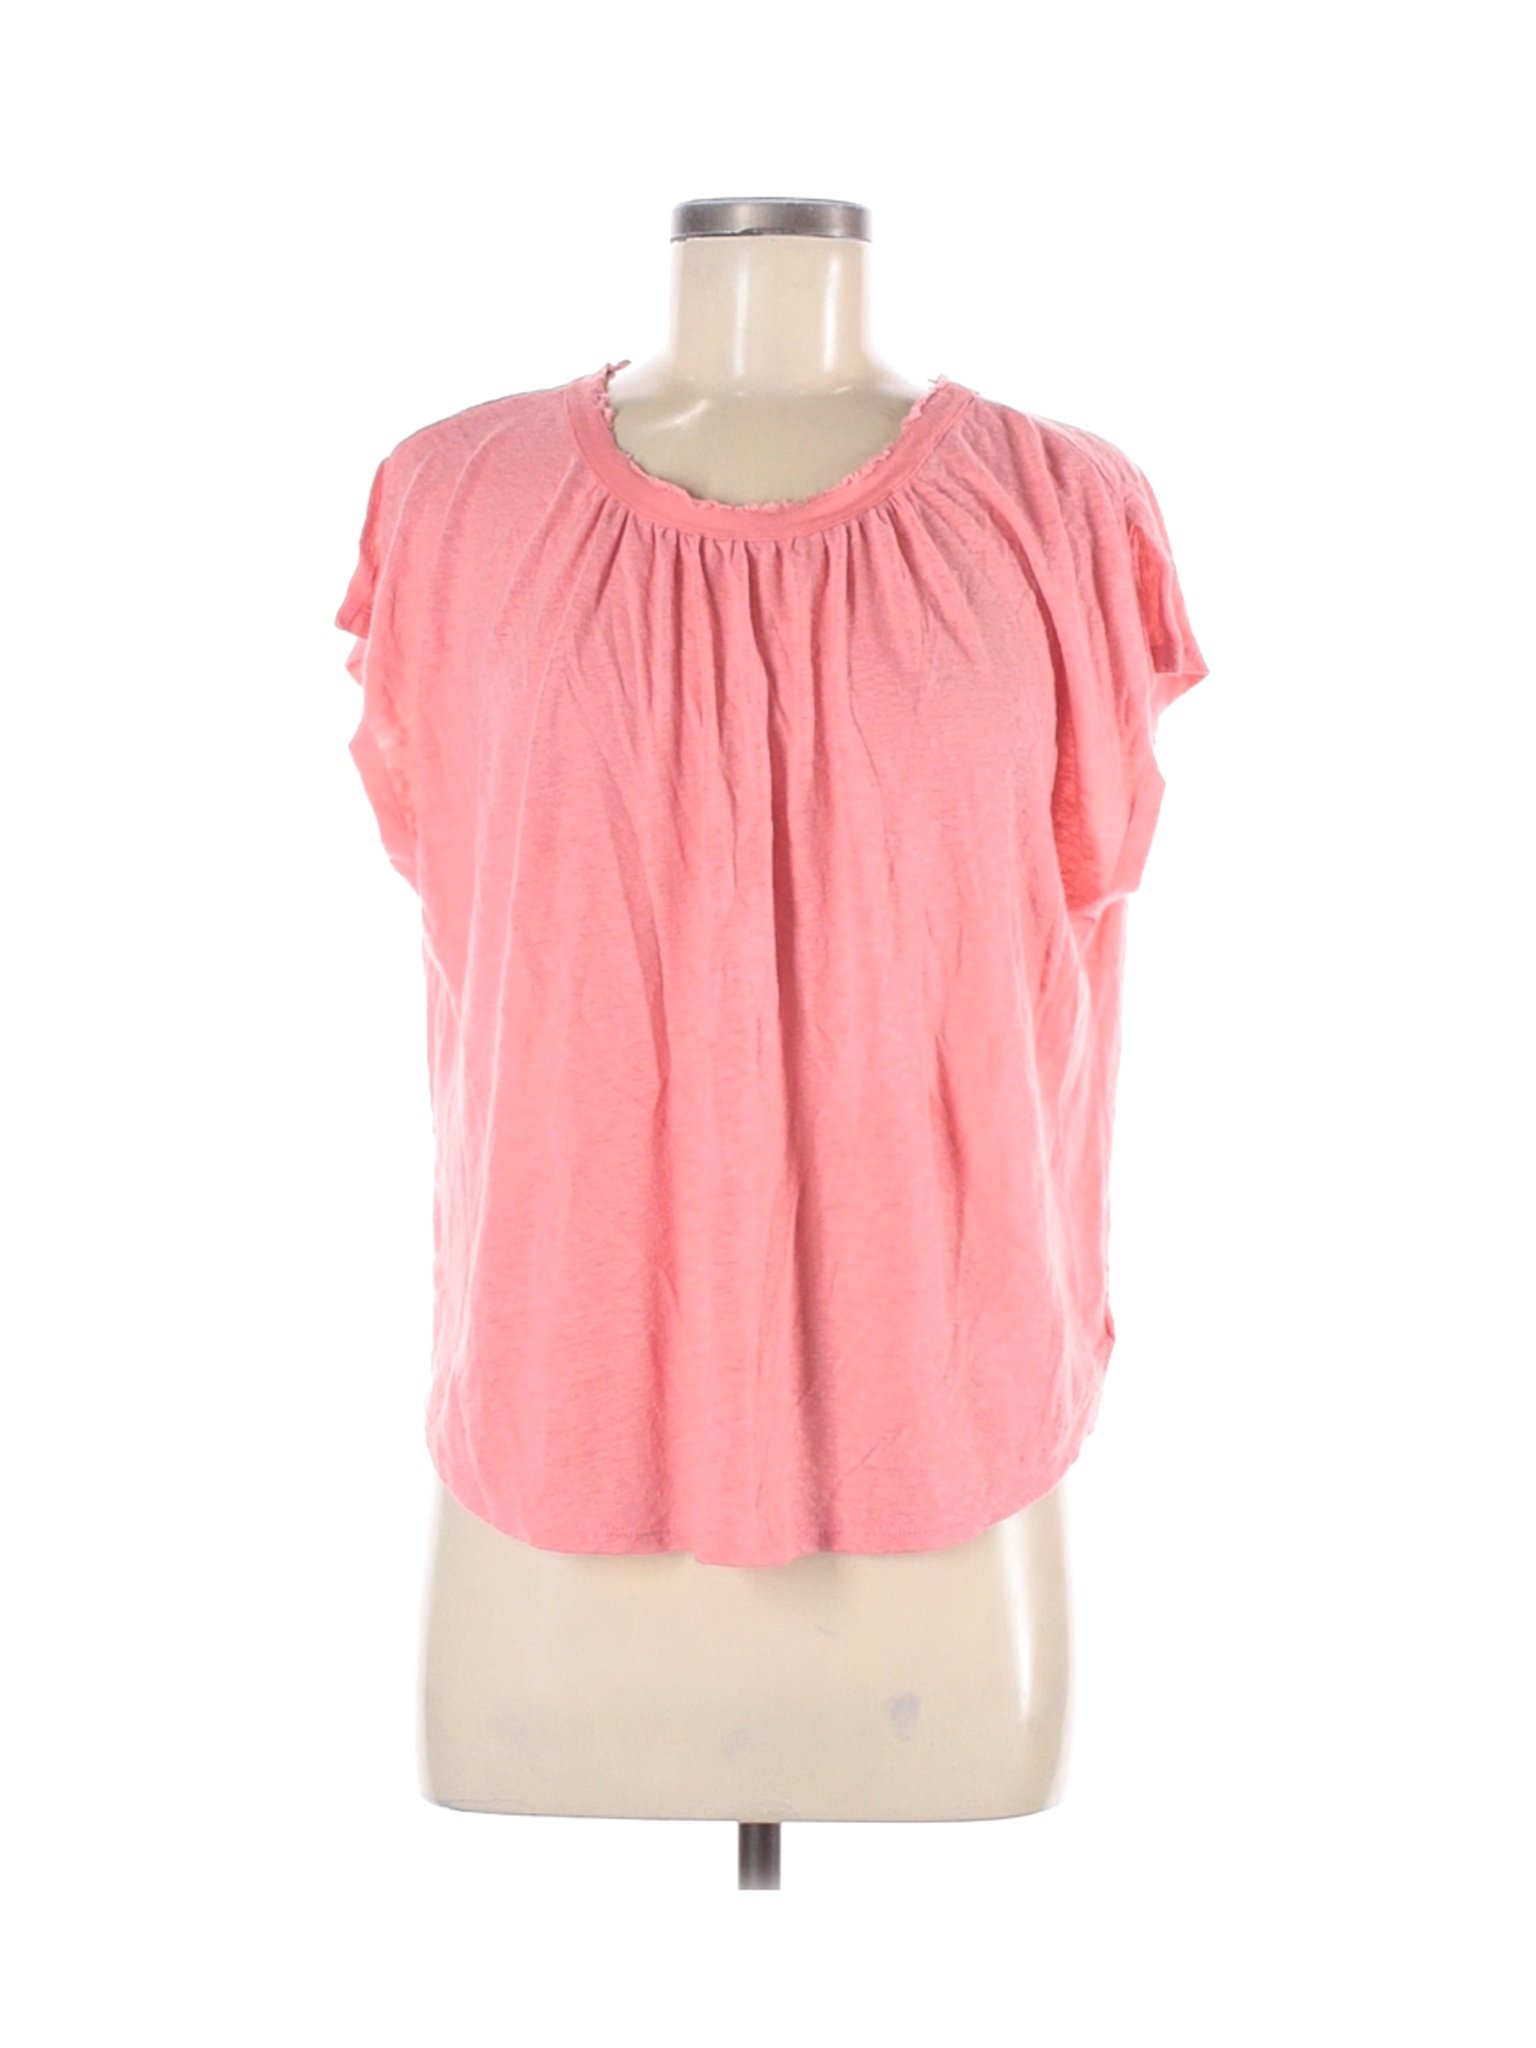 Gap Women Pink Short Sleeve Top M | eBay